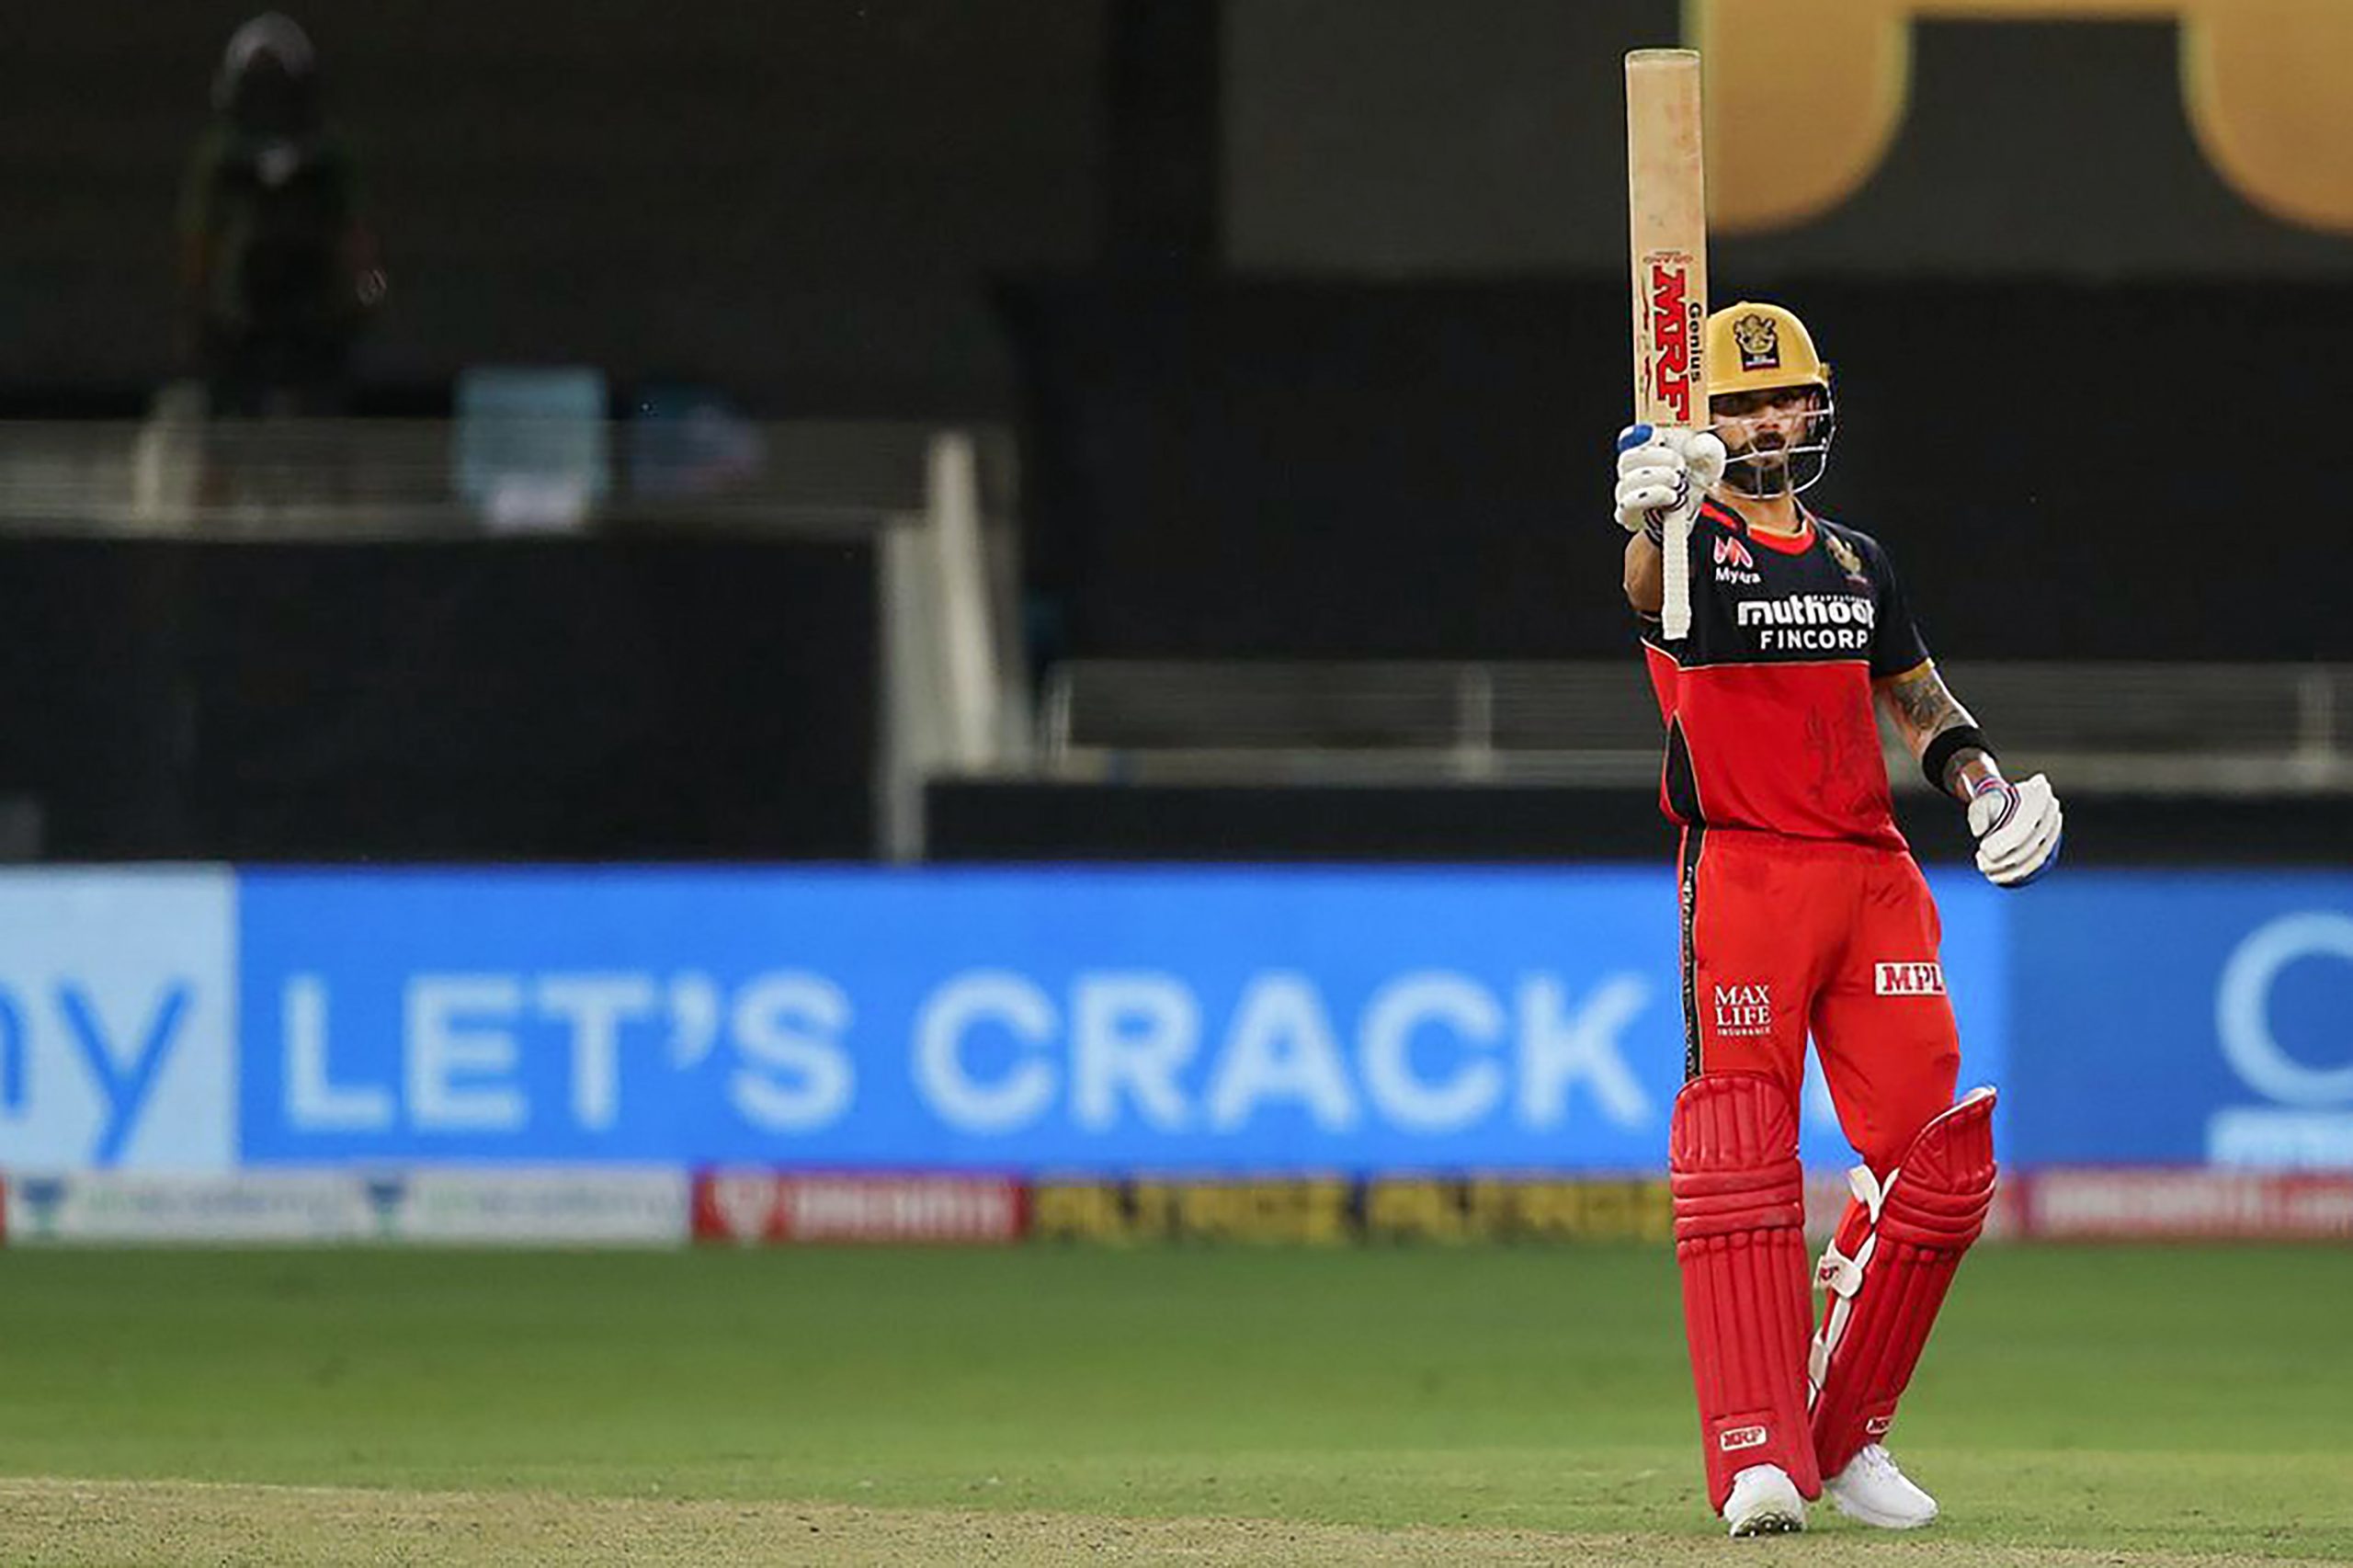 ‘Batting like a beast’: Cricketers in awe of Virat Kohli’s batting masterclass